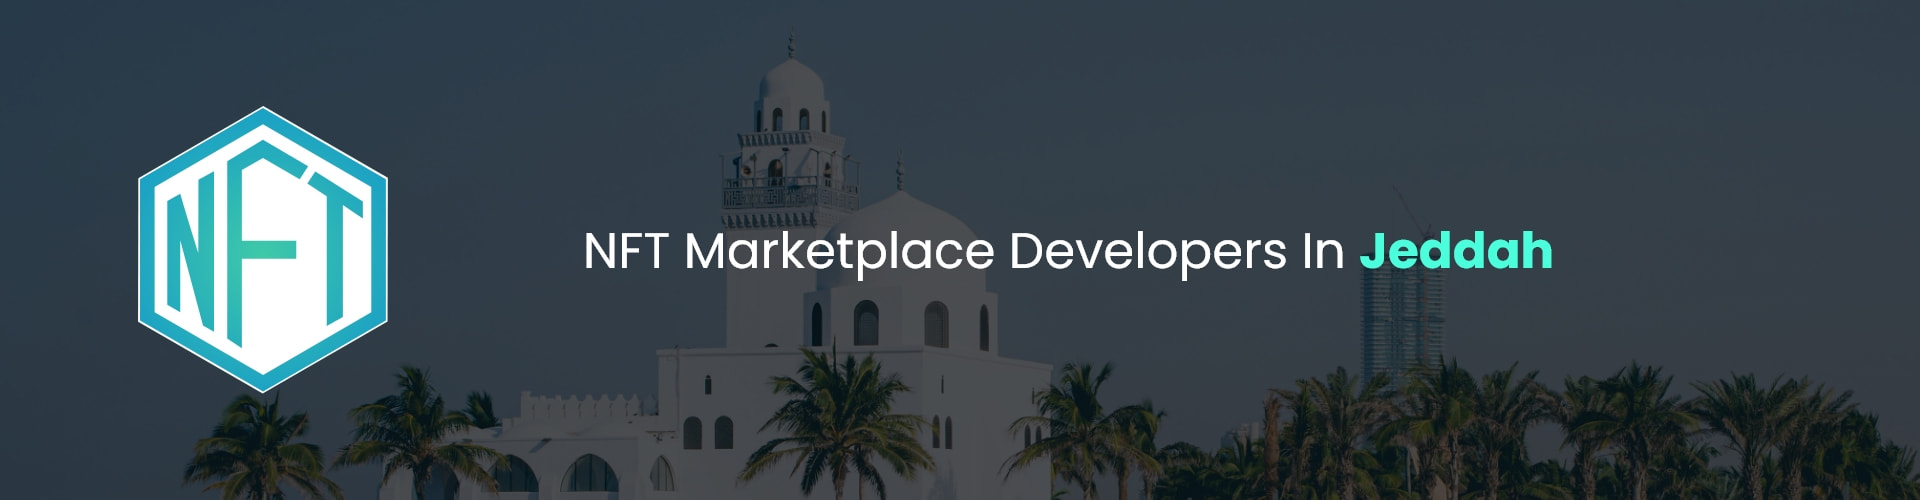 hire nft marketplace developers in Jeddah